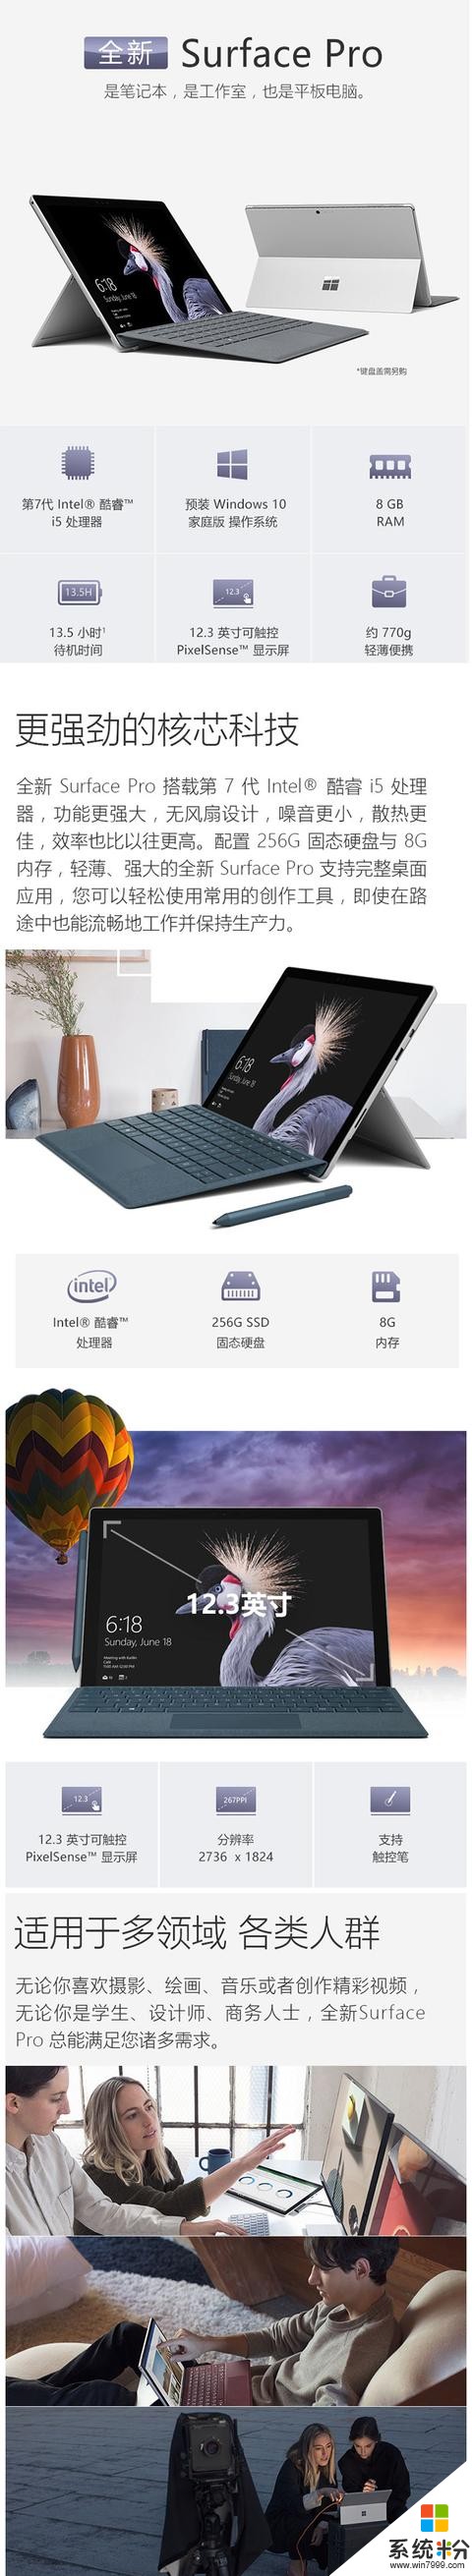 微軟New Surface Pro新品i5 256G 8G(2)